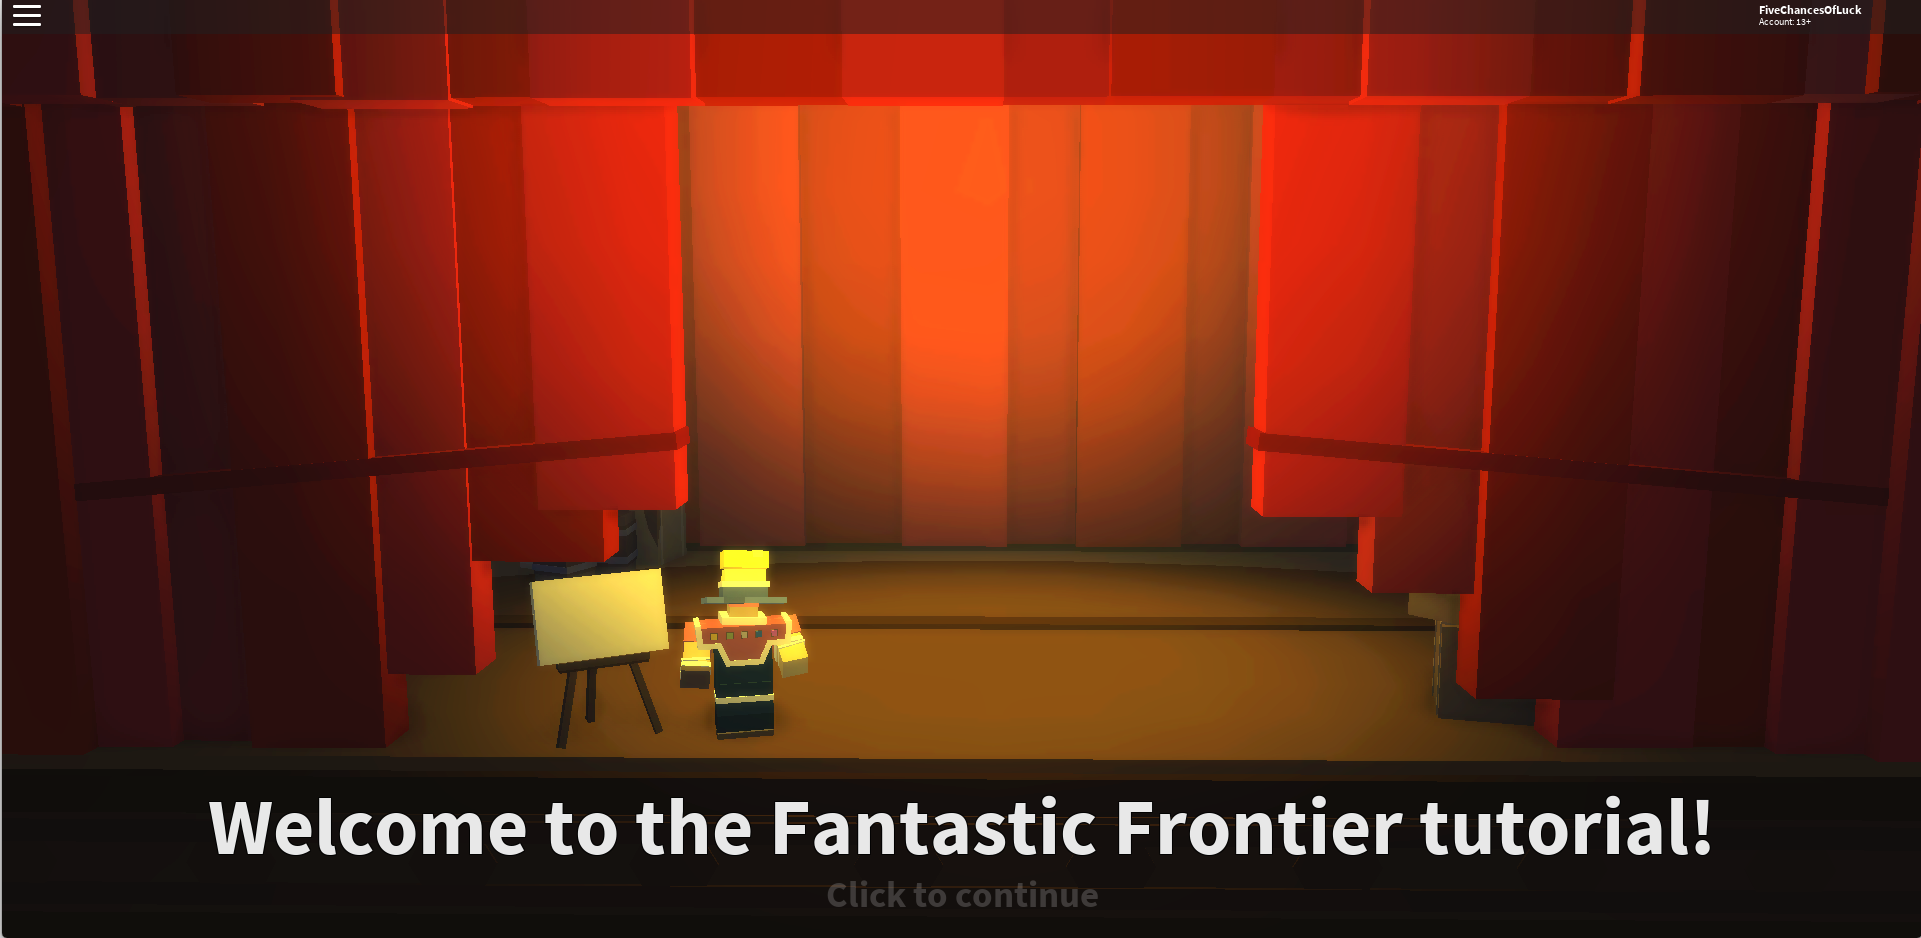 Tutorial Fantastic Frontier Roblox Wiki Fandom - what is the earliest video of fantastic frontier roblox